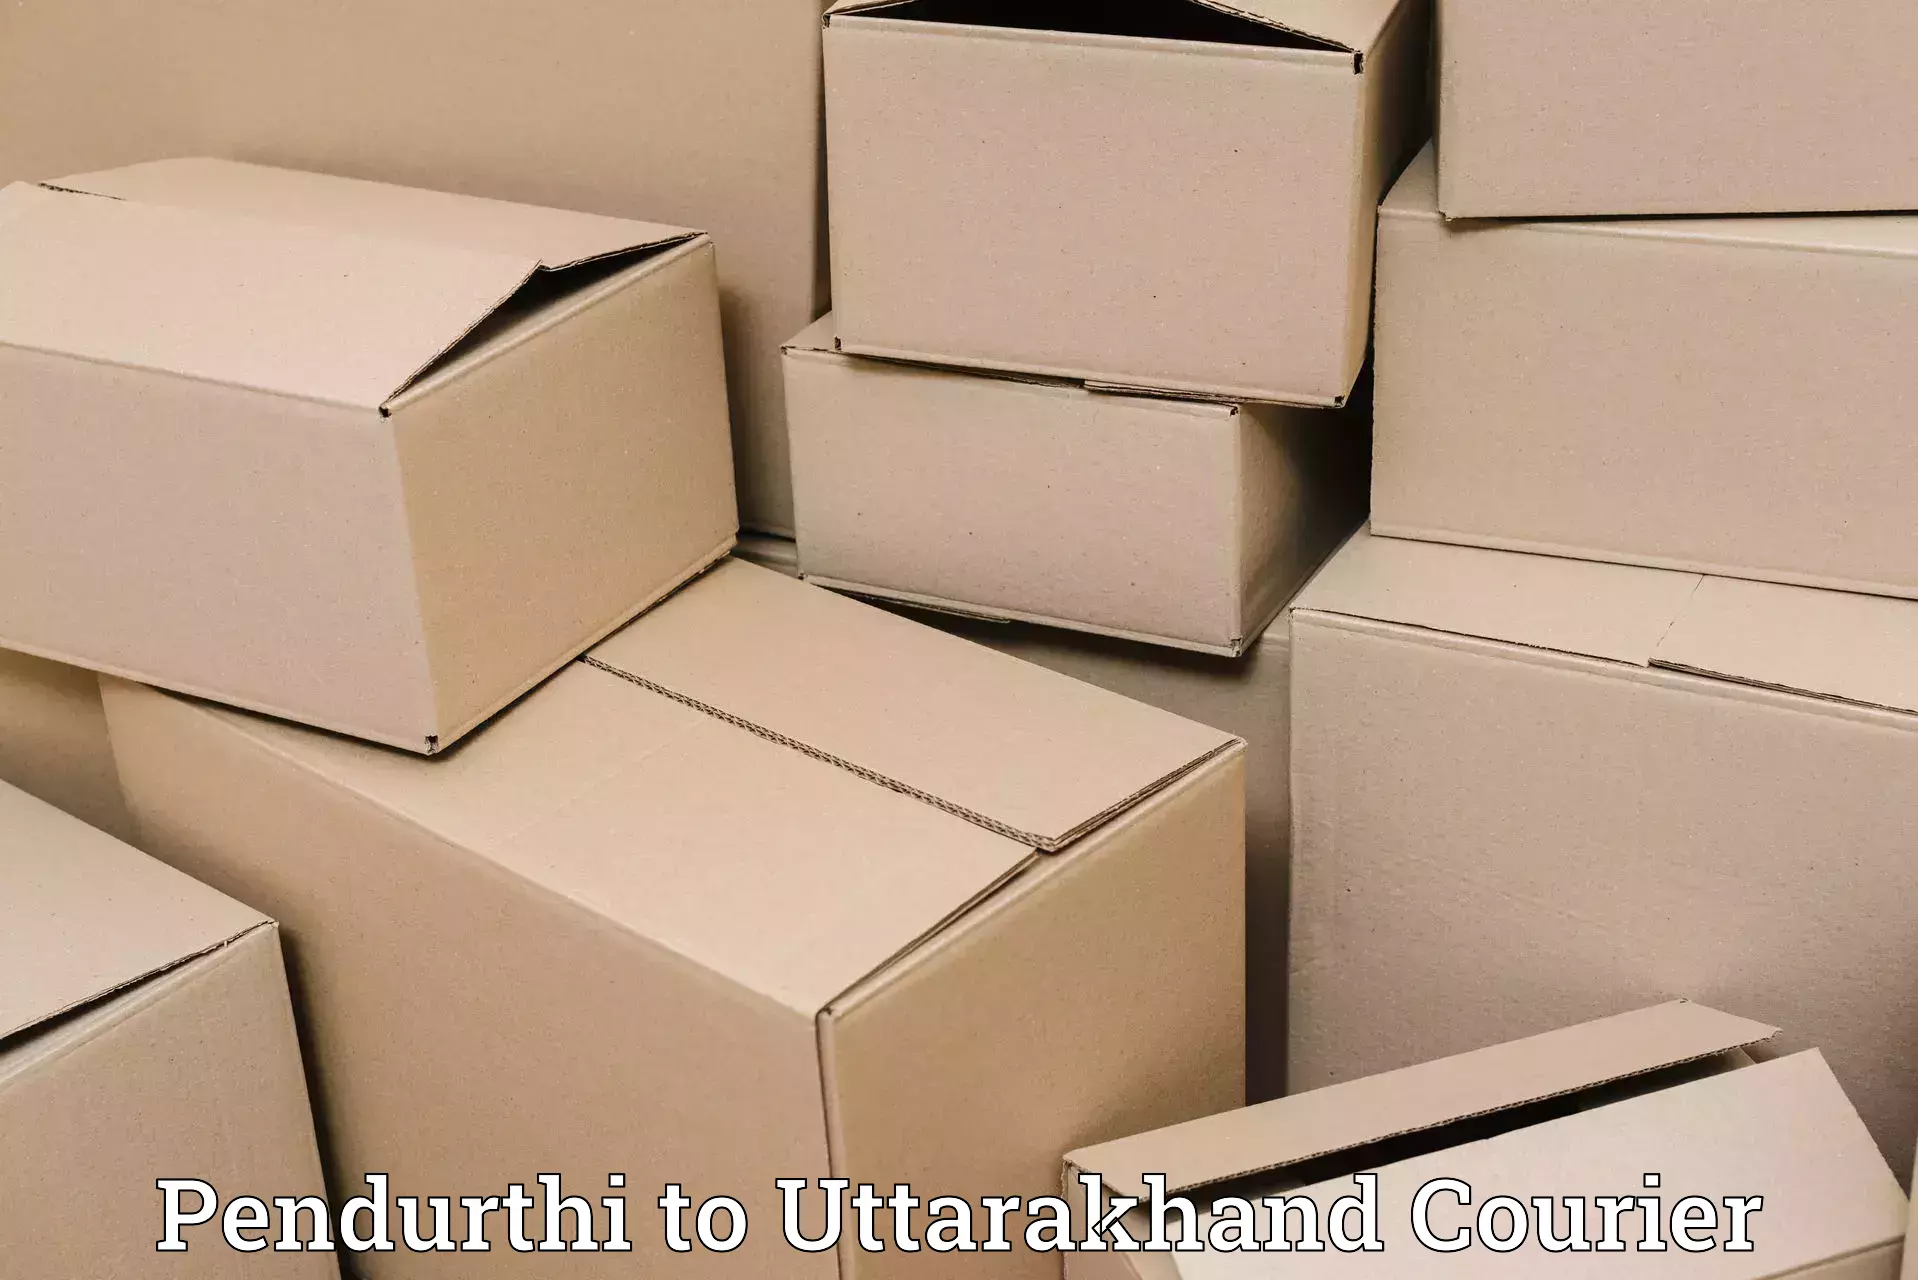 State-of-the-art courier technology Pendurthi to Uttarkashi